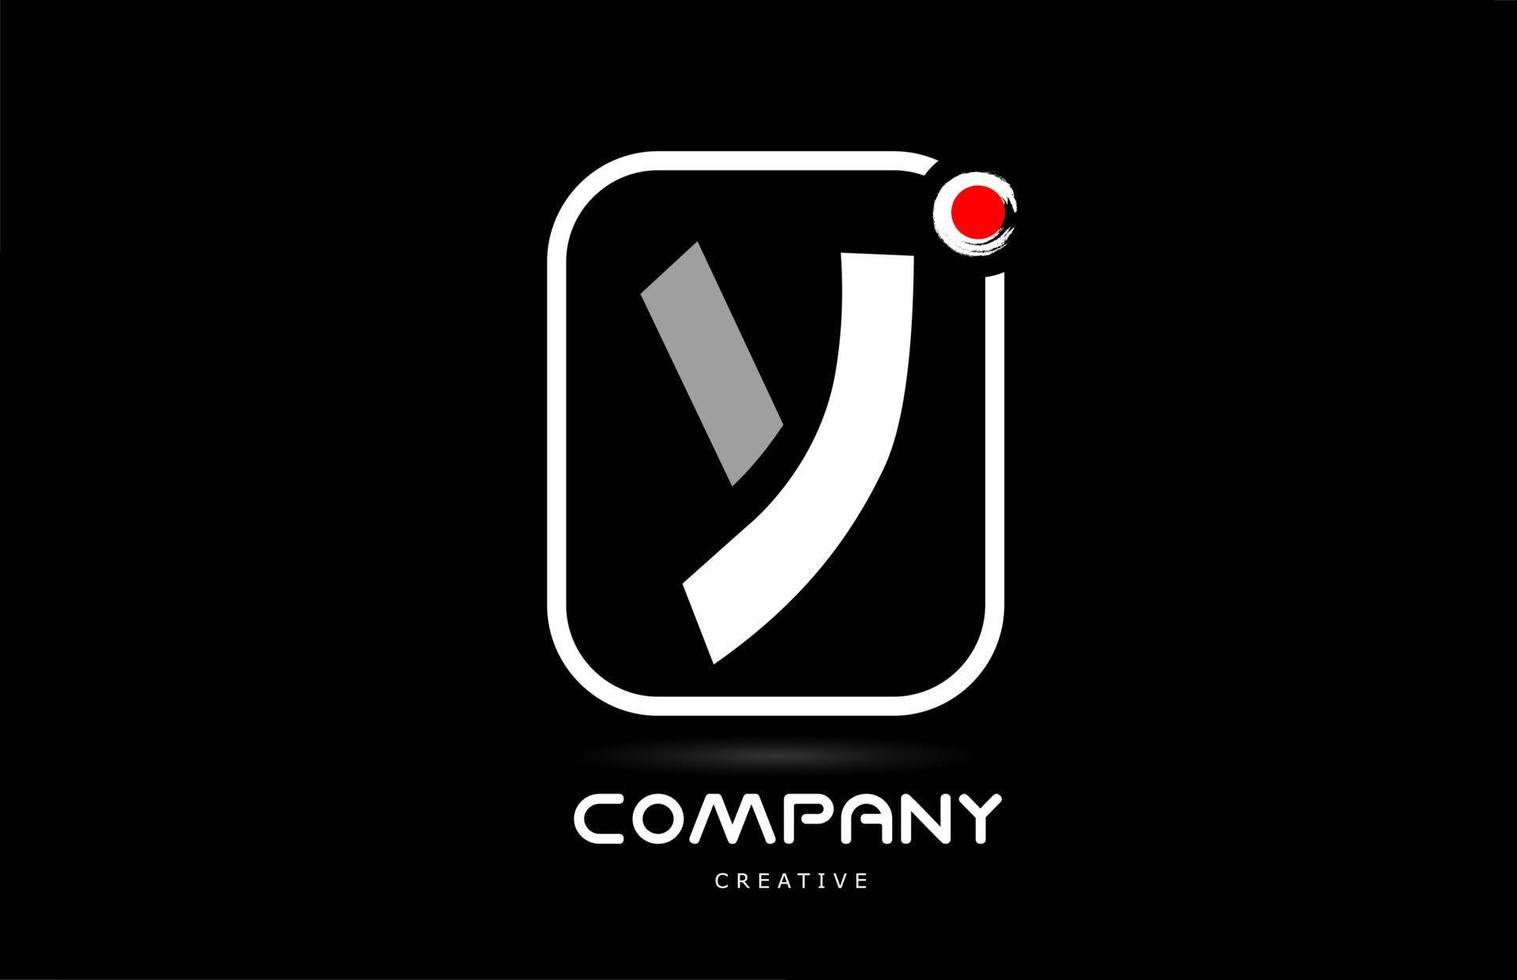 y design de ícone de logotipo de letra de alfabeto branco preto com letras de estilo japonês e ponto vermelho vetor